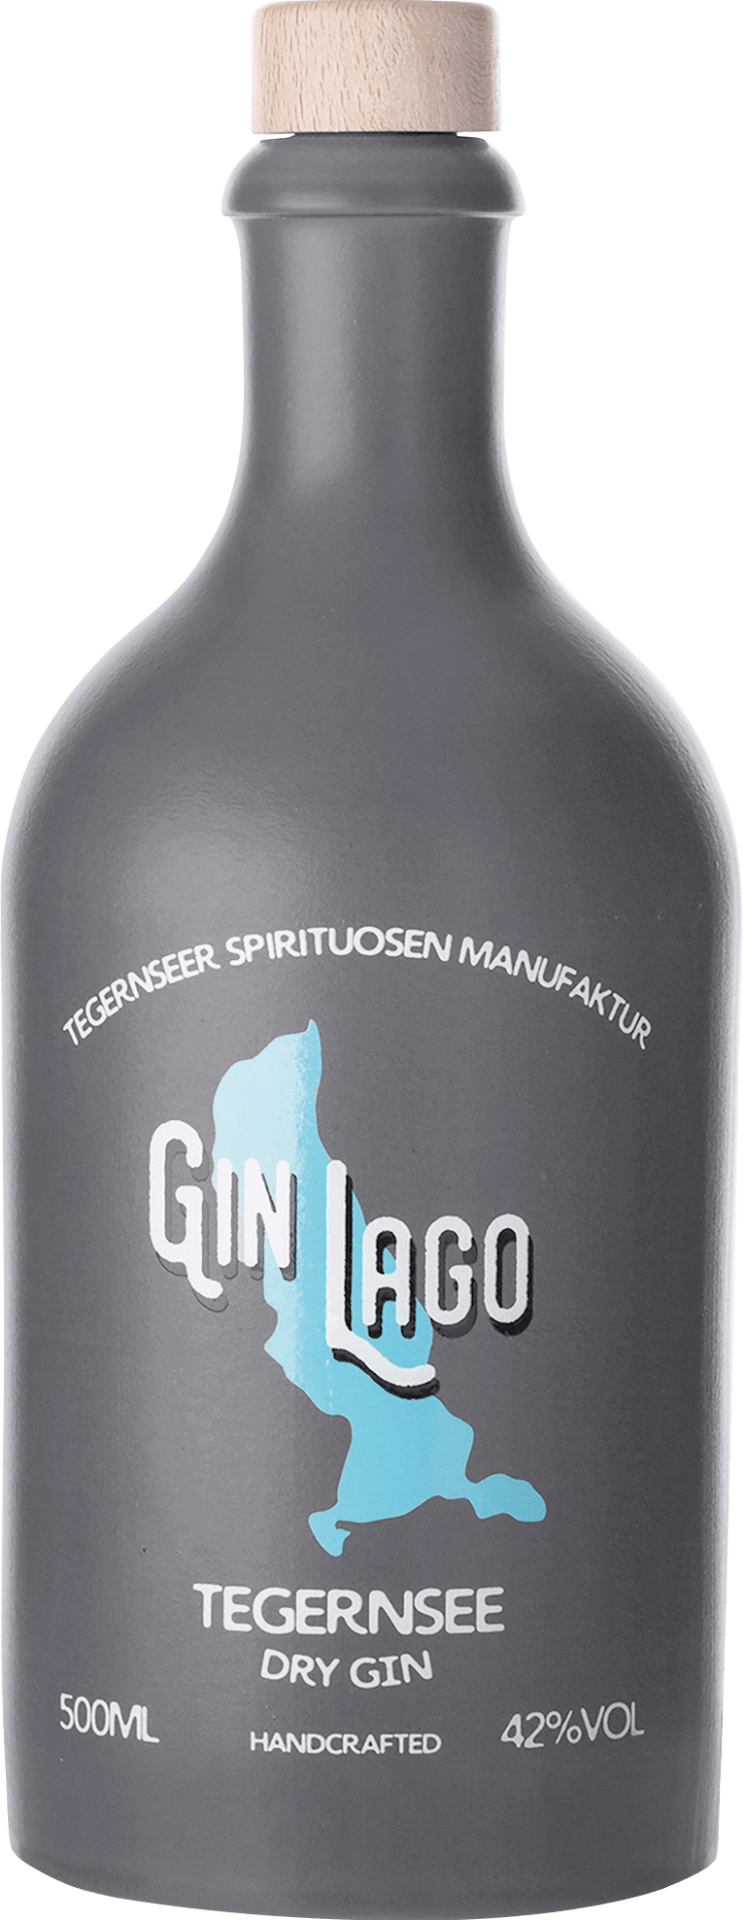 GIN LAGO Tegernsee Dry Gin